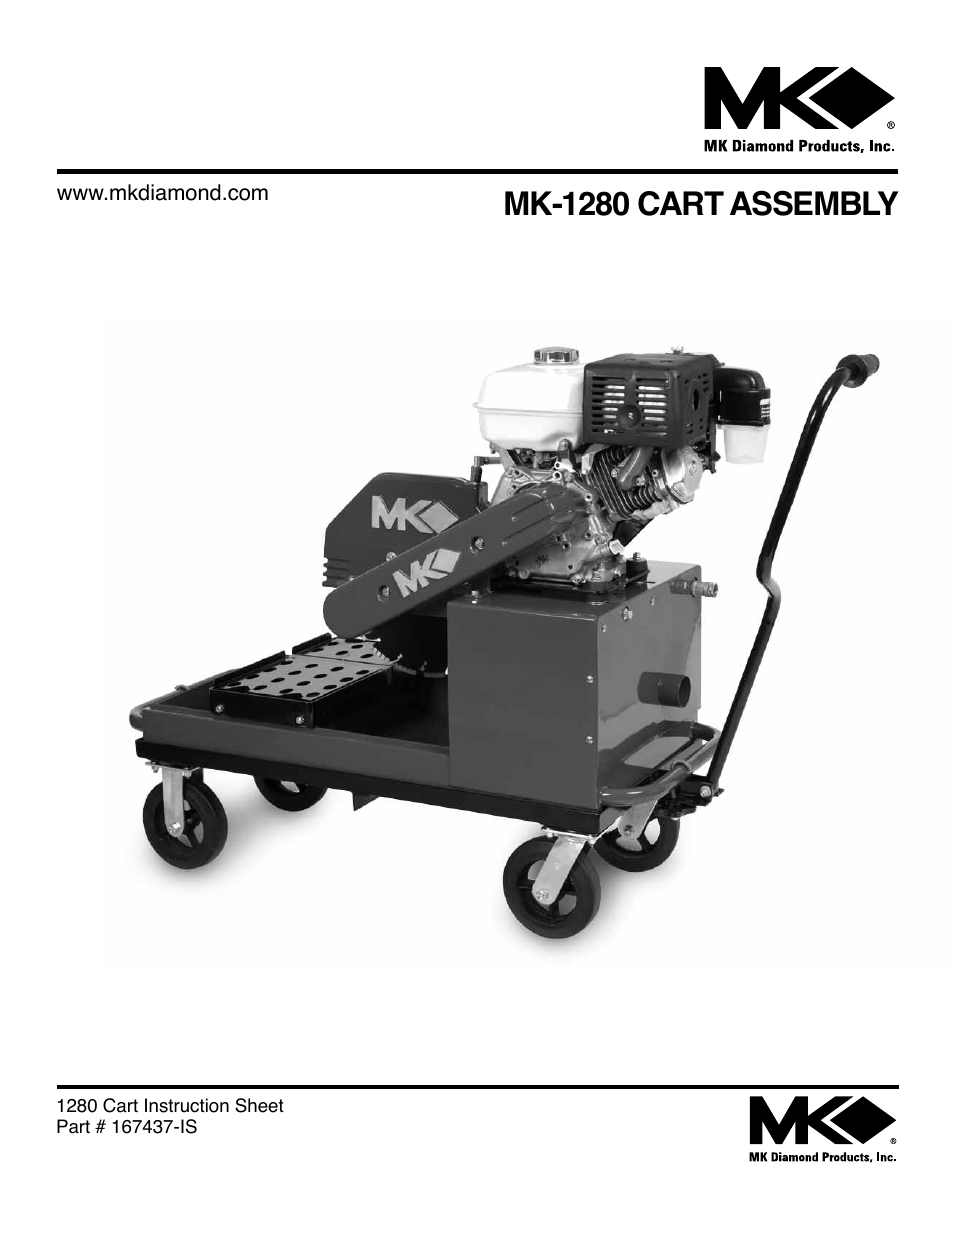 MK-1280 Rolling Cart